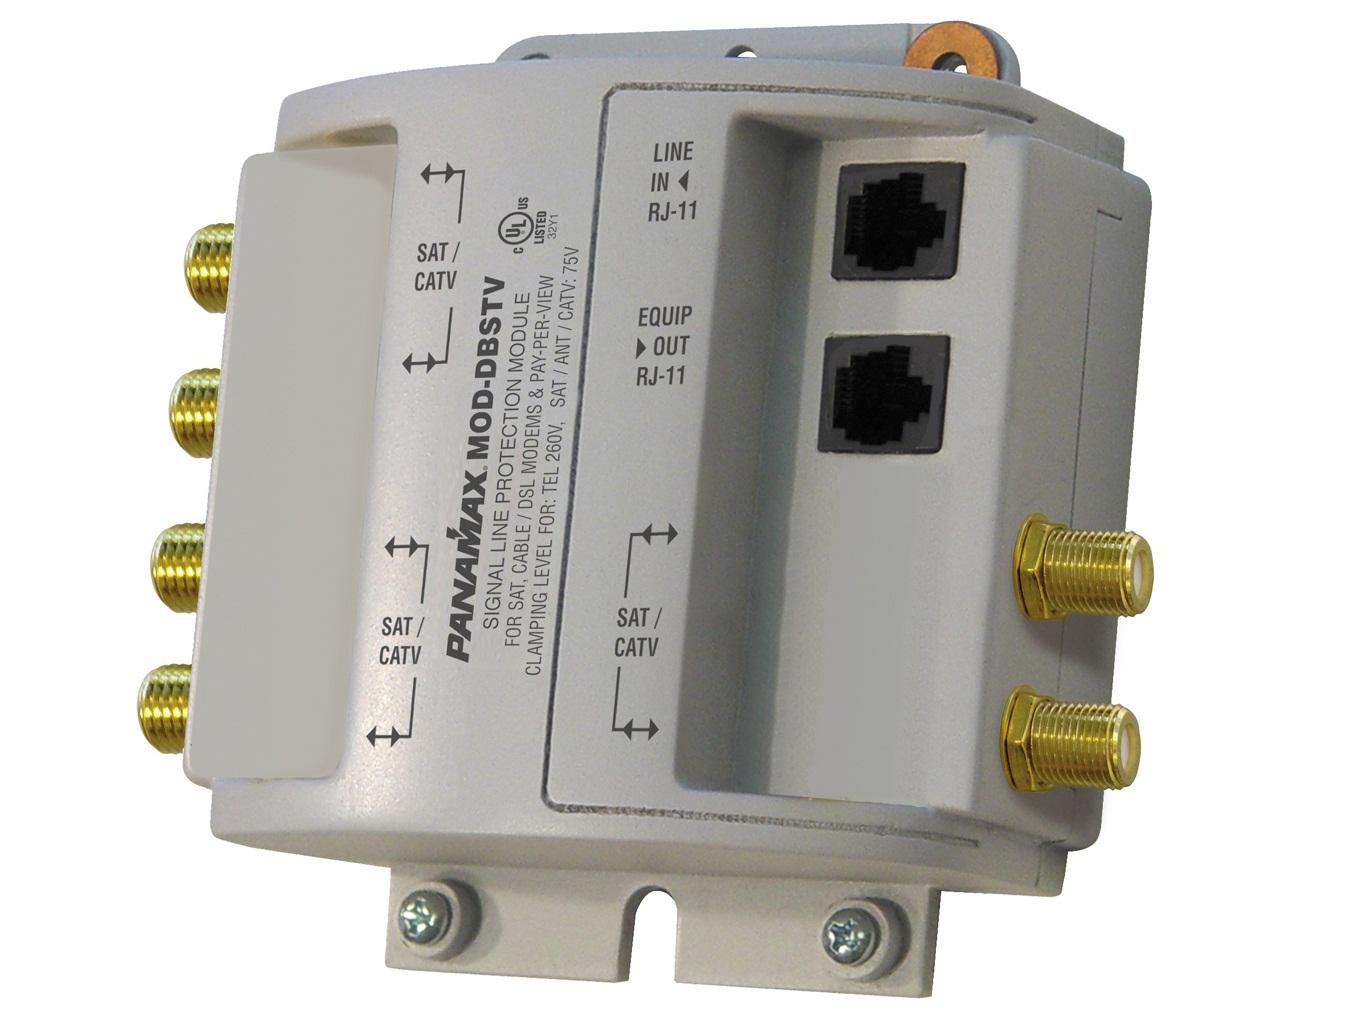 MOD-DBSTV Premium Signal Line Protection Module by Panamax